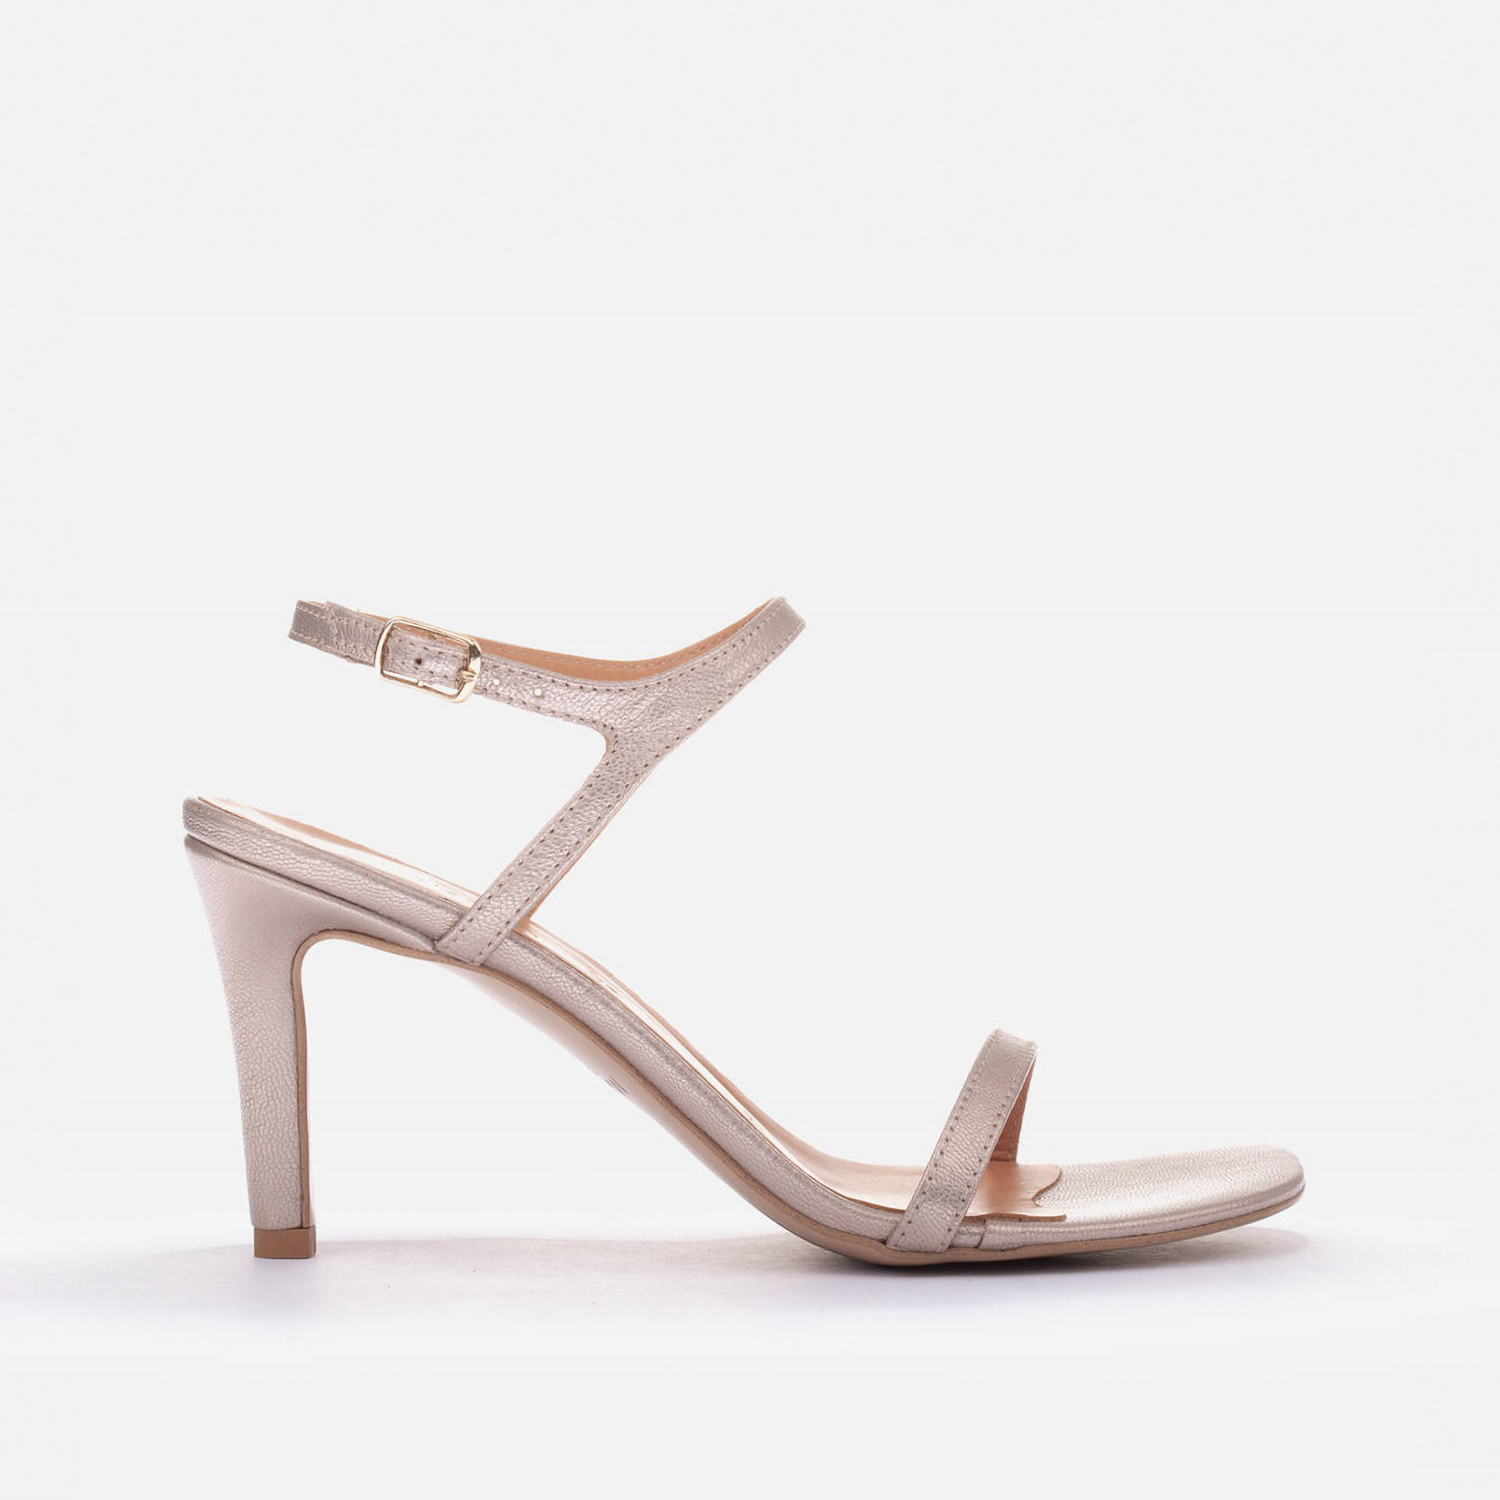 High-heeled sandals - MarcoShoes.eu Online Shop